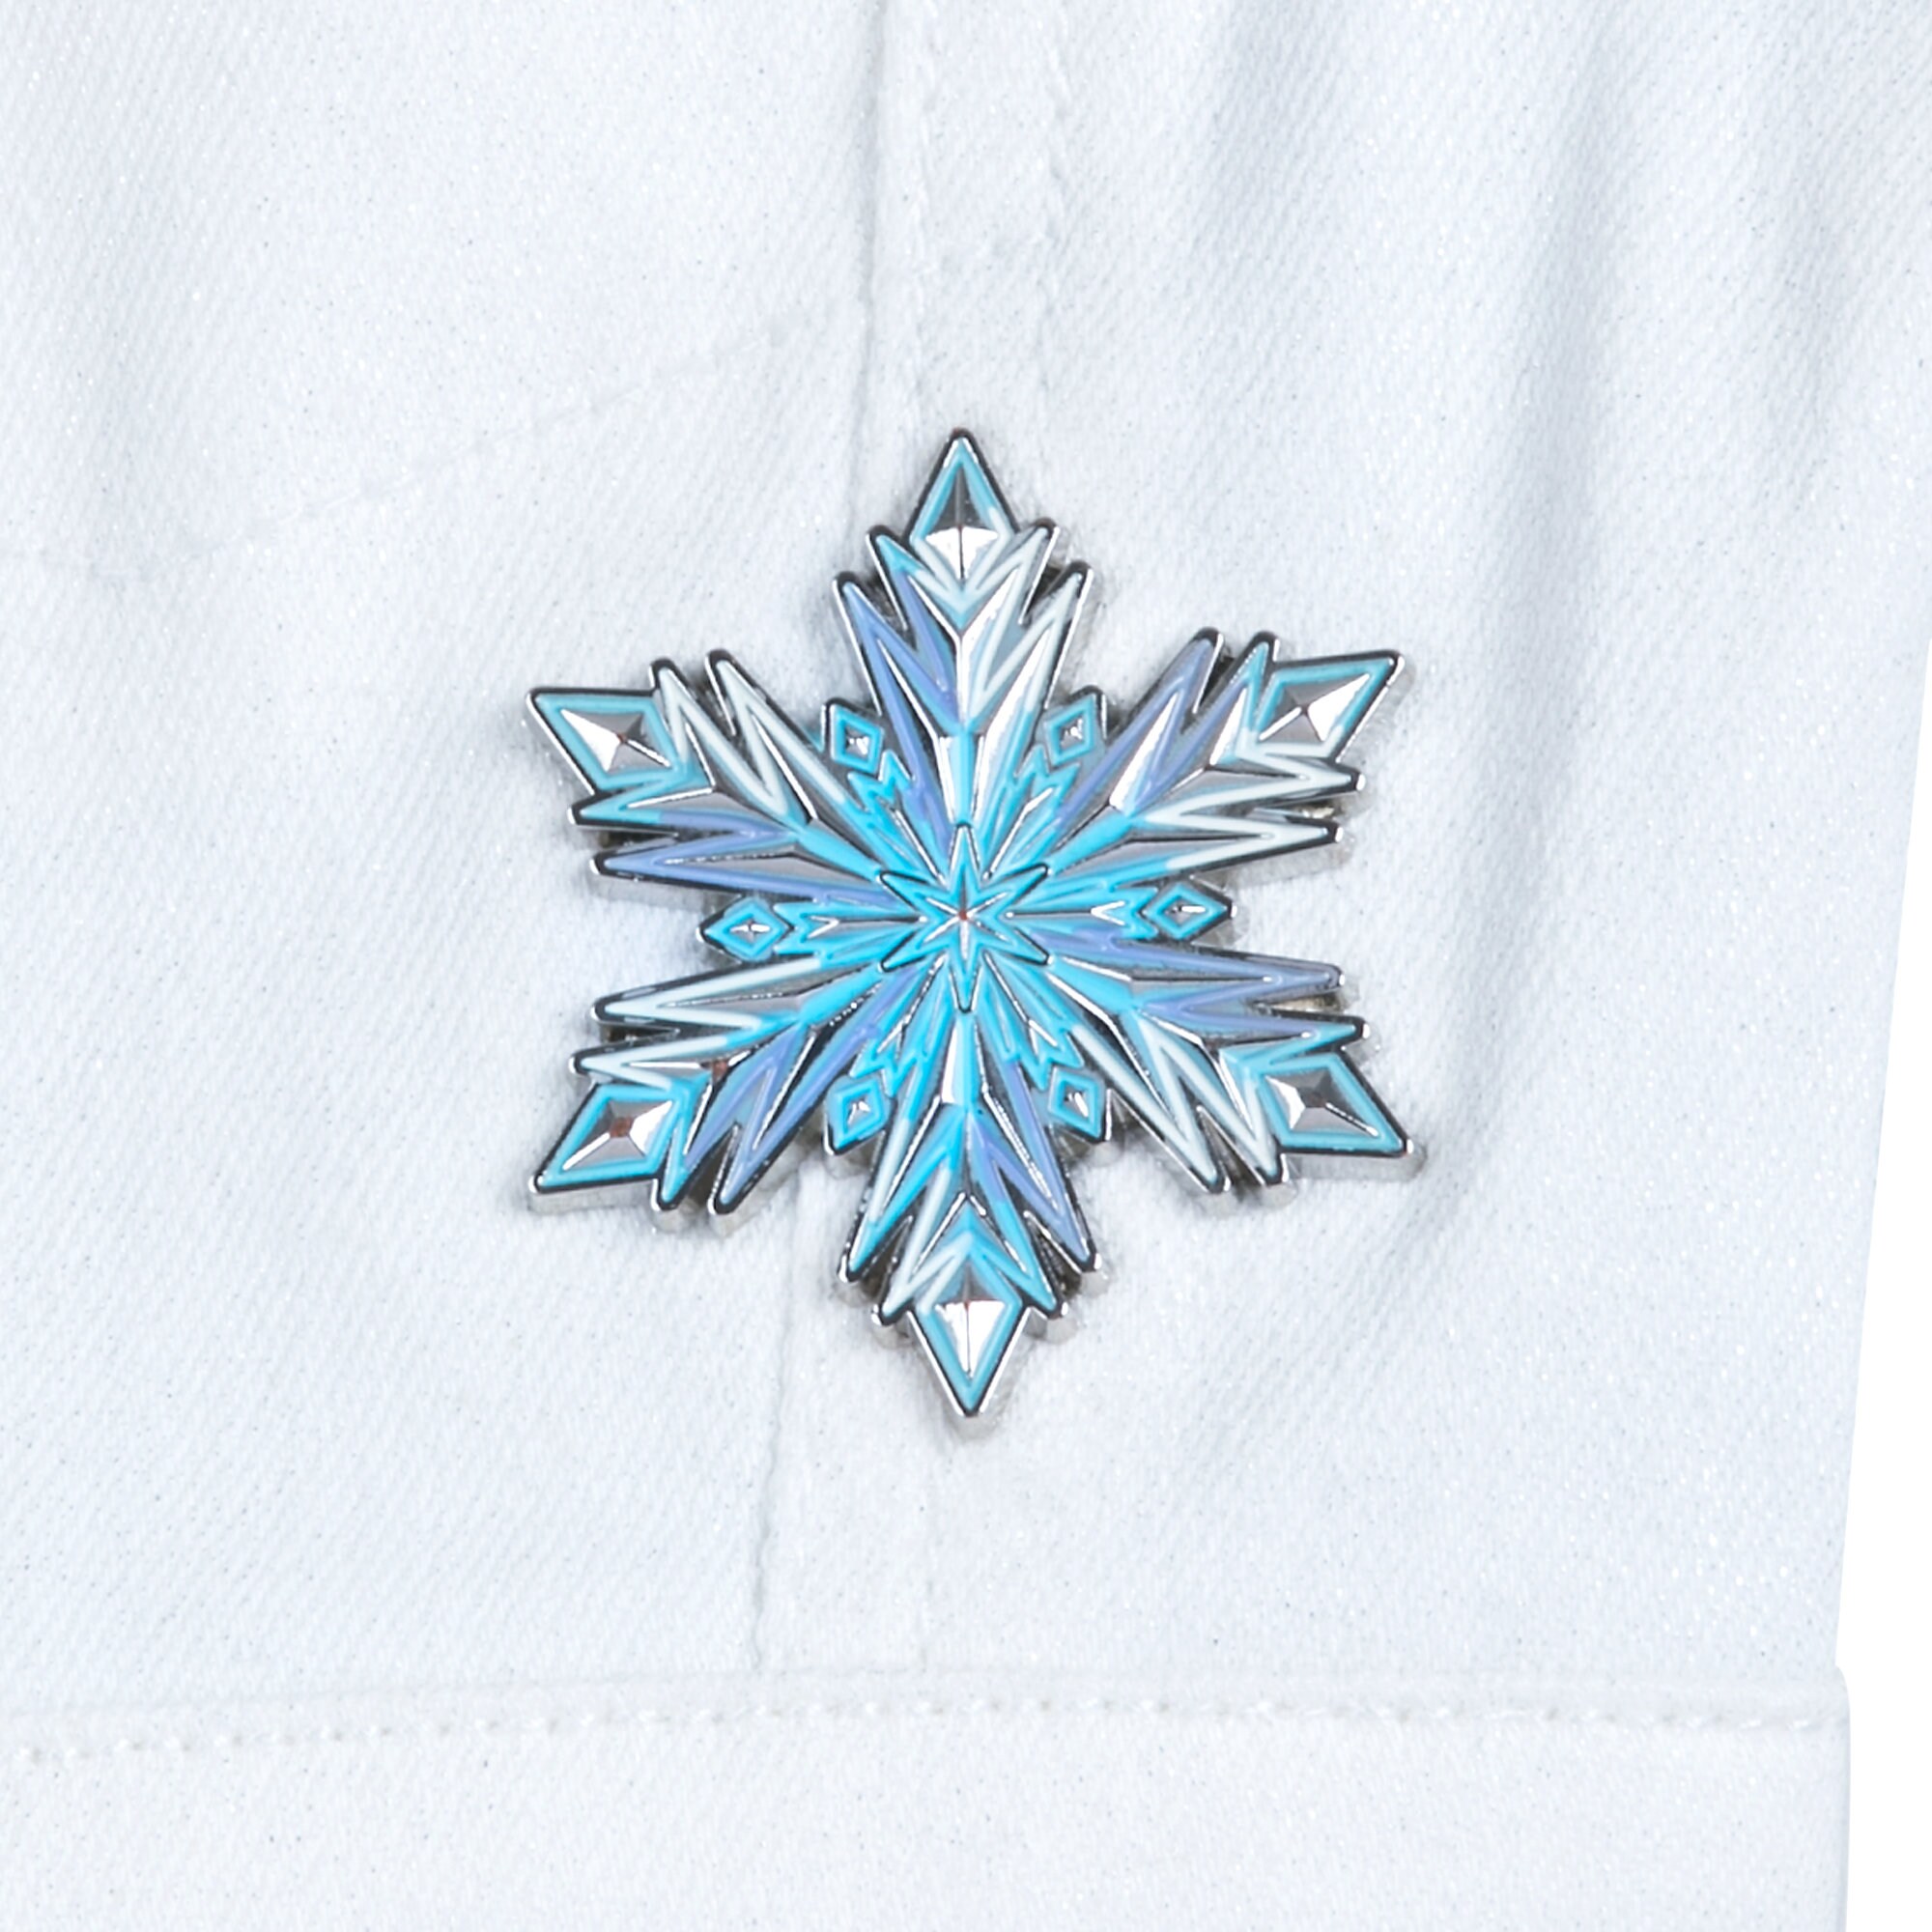 Frozen Denim Jacket for Girls